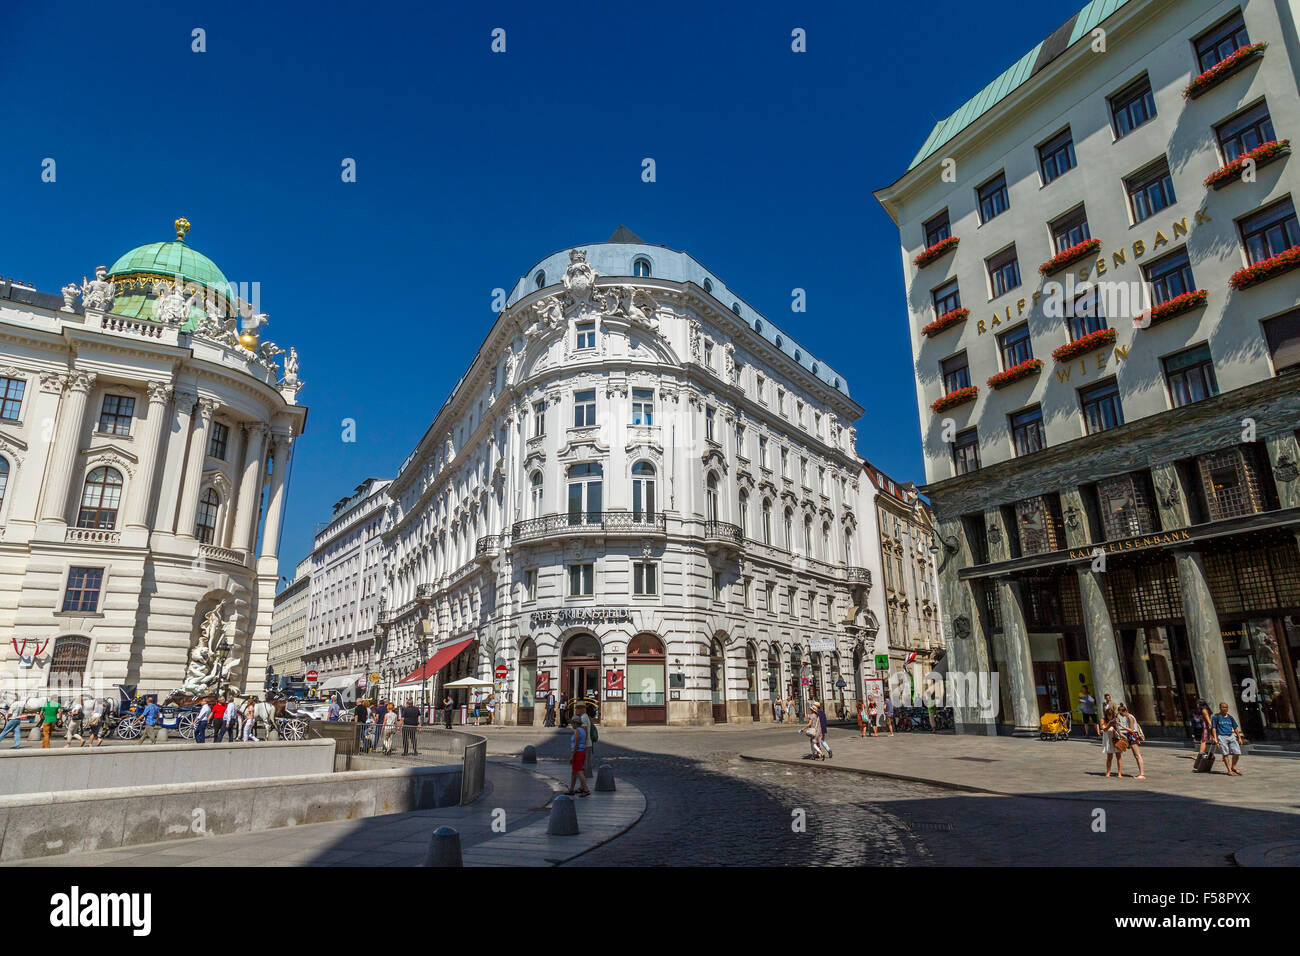 Buildings and architecture on Michaelerplatz, Vienna, Austria. Stock Photo